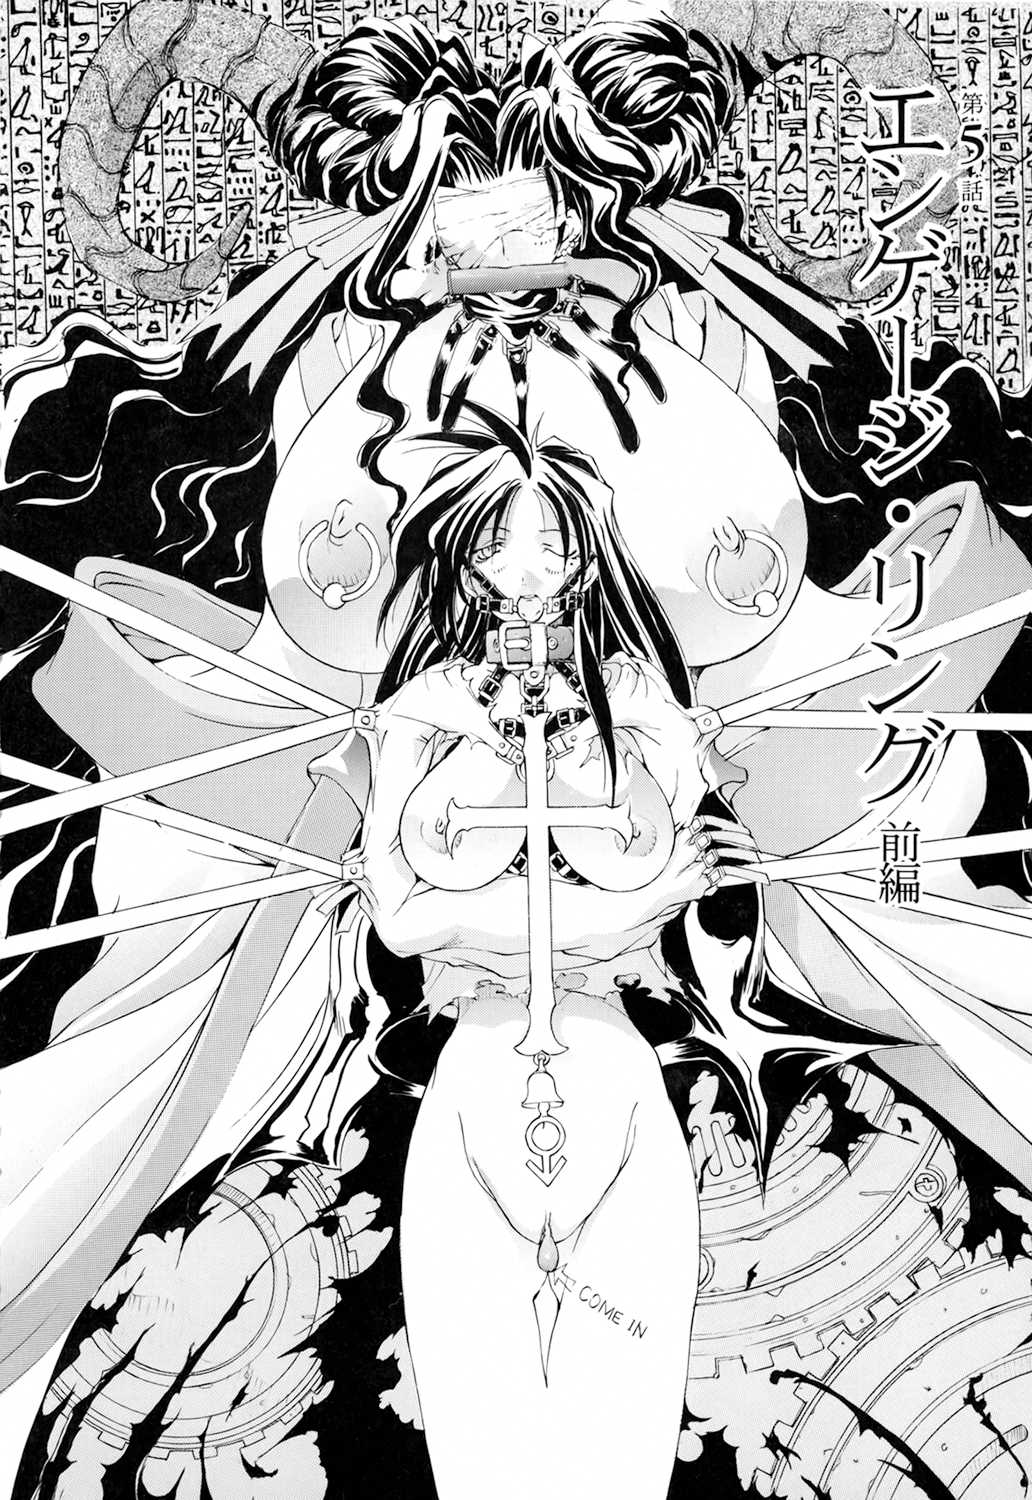 [Mikoshiro Nagitoh] Black Mass Vol. 1 [巫代凪遠] 収穫祭 第01巻